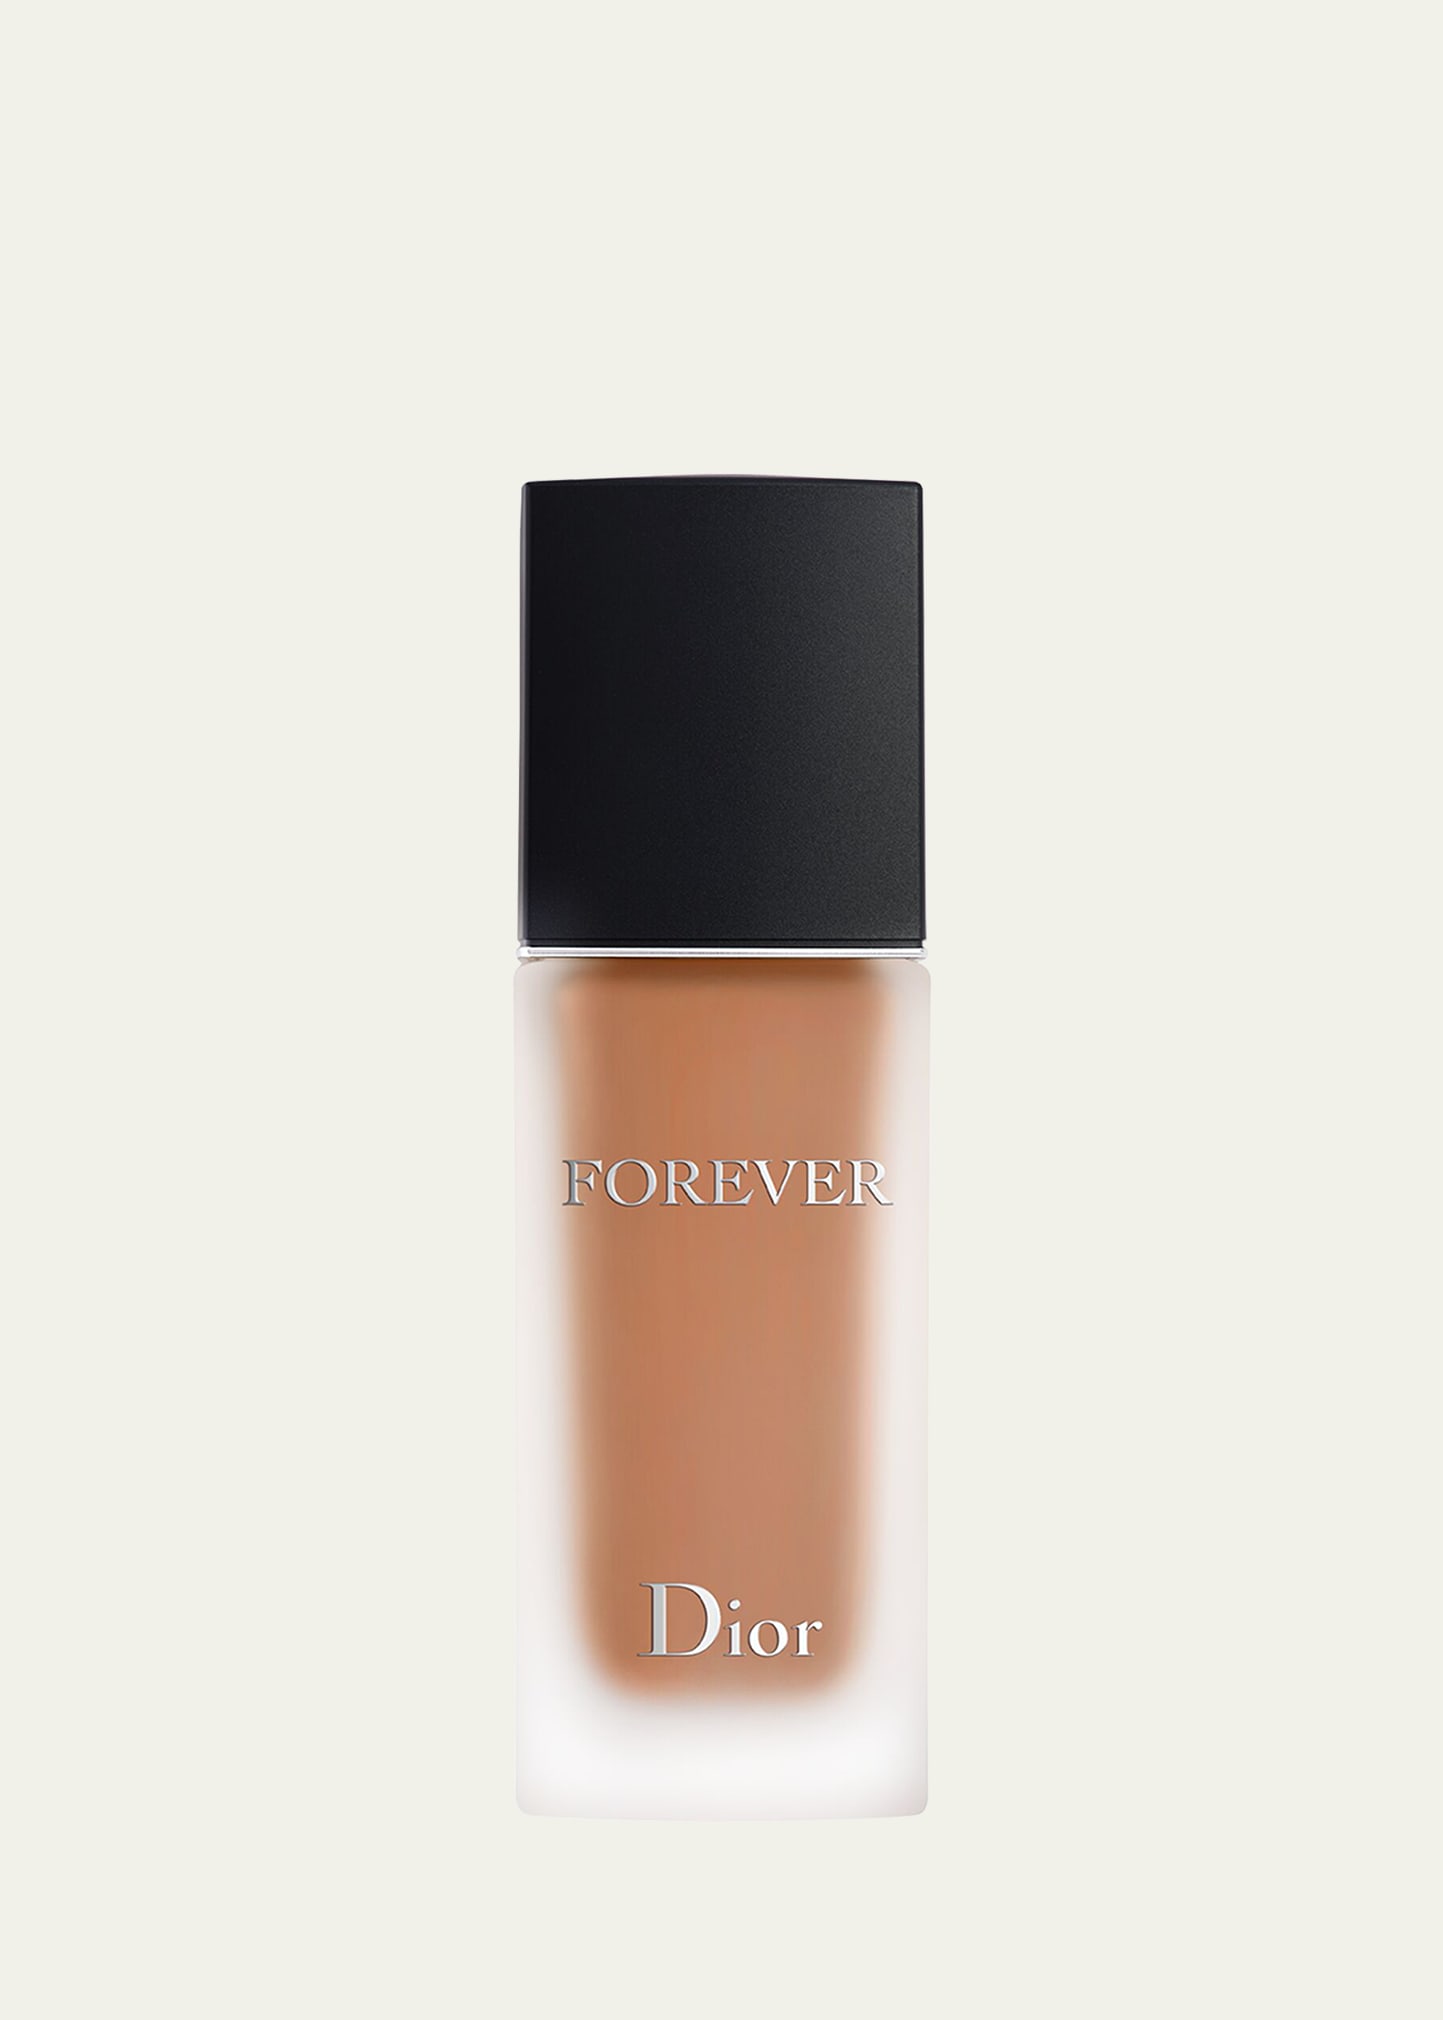 Dior 1 Oz. Forever Matte Skincare Foundation Spf 15 In 5 Neutral